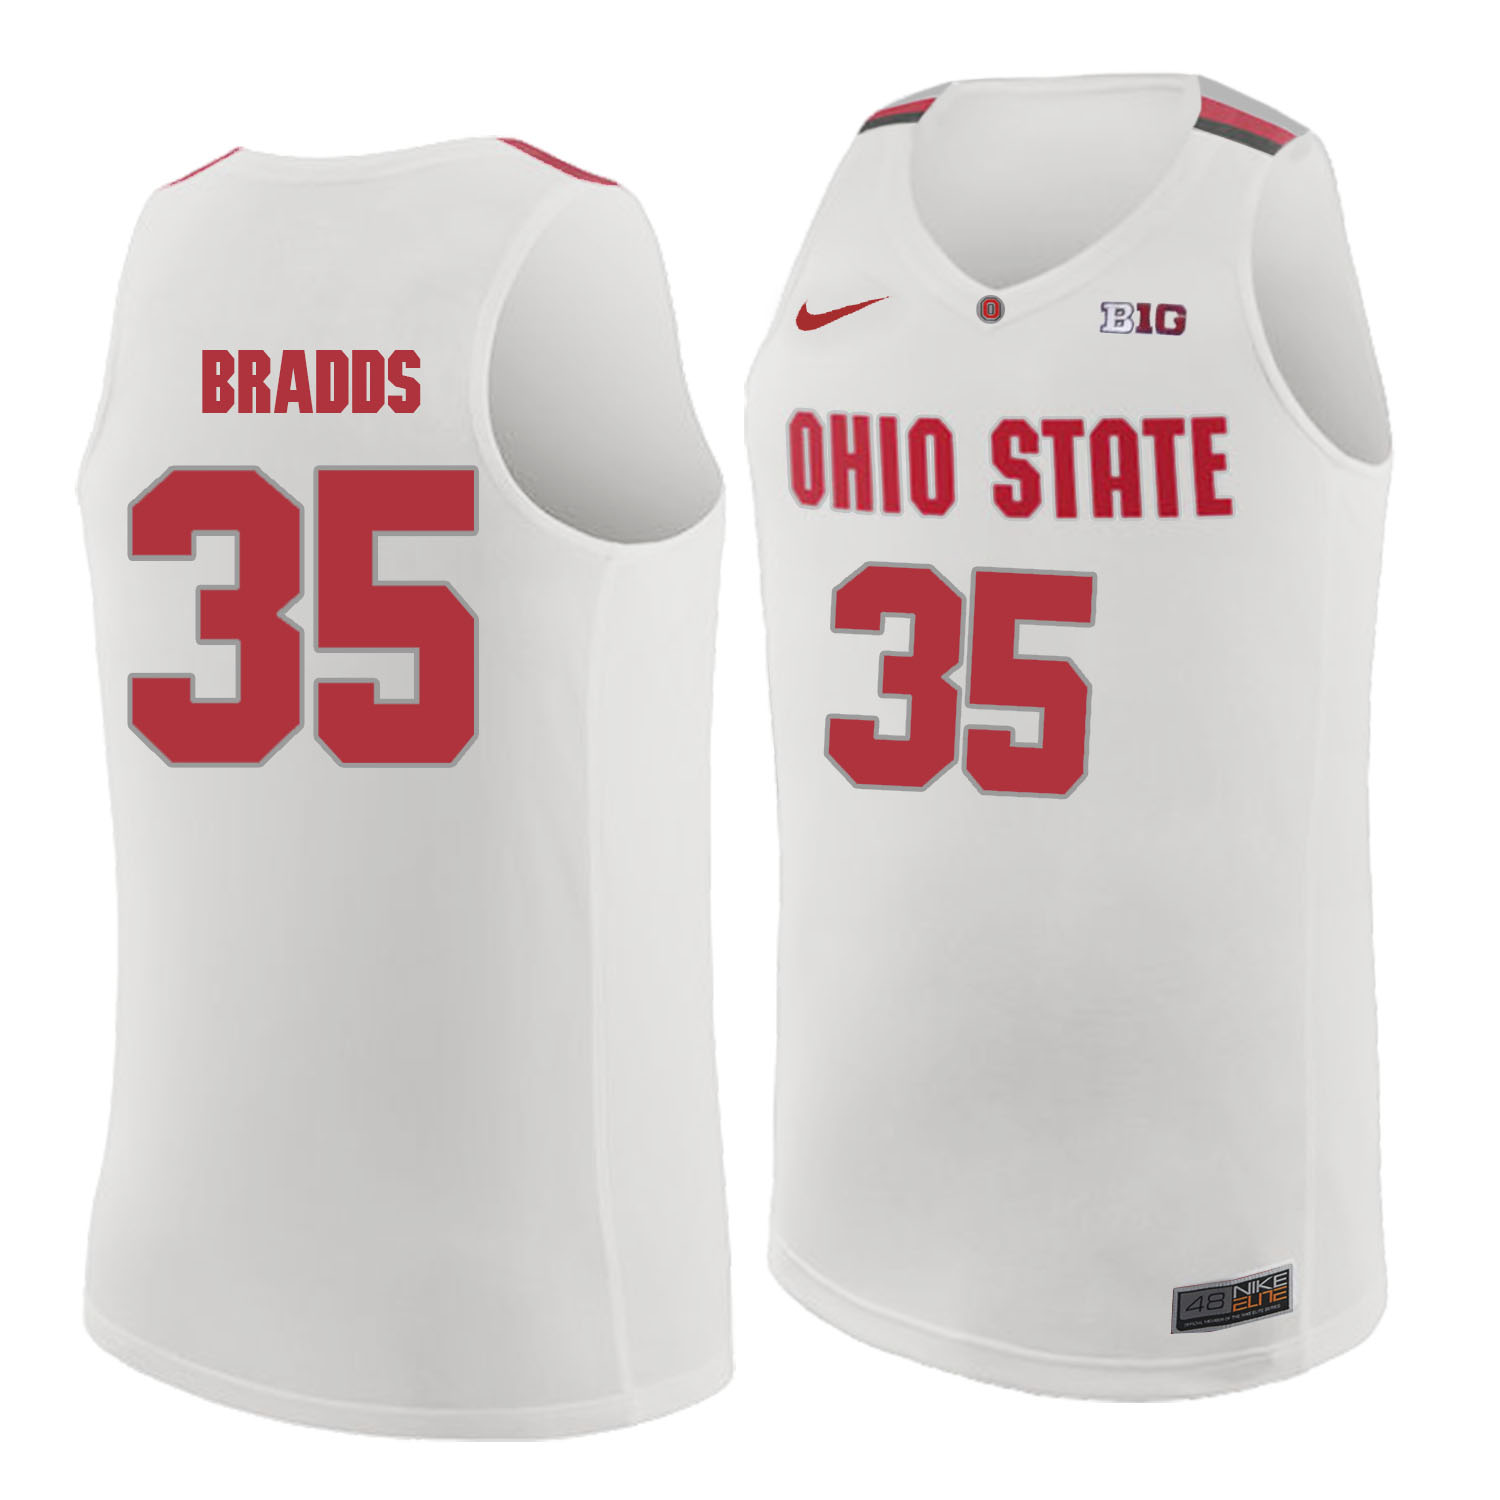 Ohio State Buckeyes 35 Gary Bradds White College Basketball Jersey